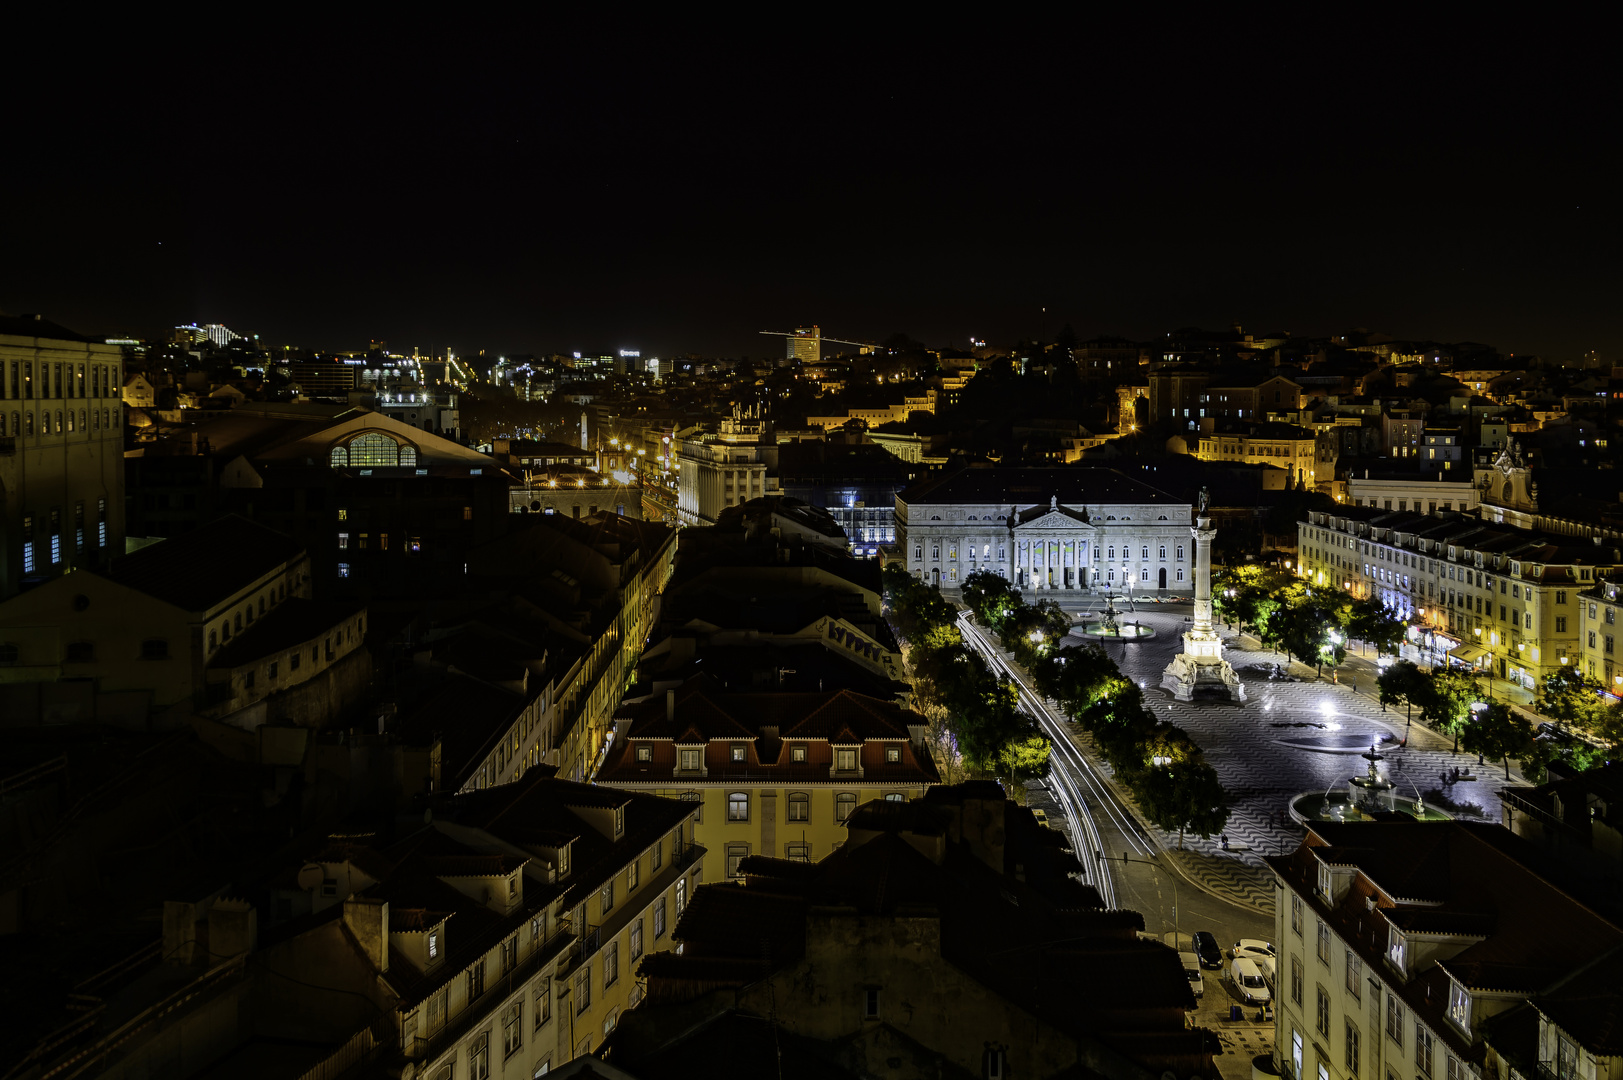 Lissabon by night - Rossio